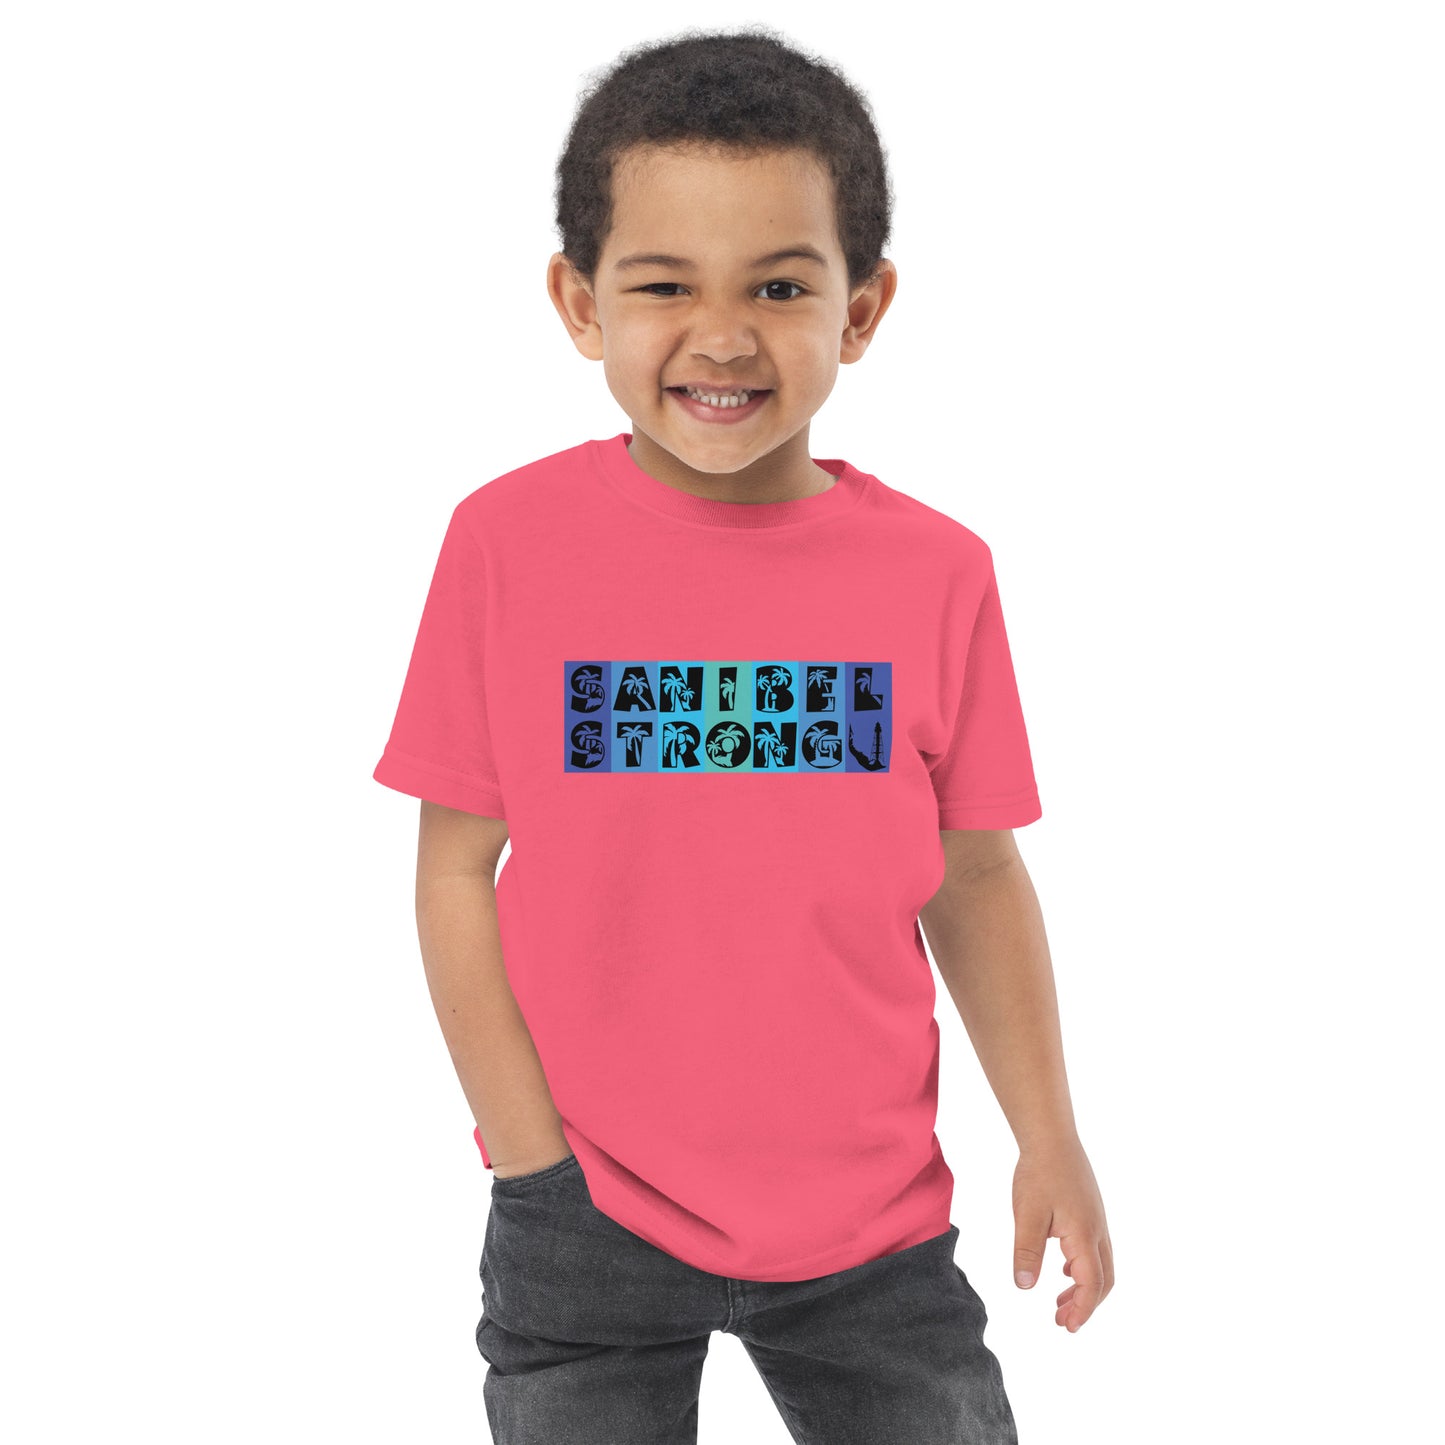 Sanibel Strong Toddler Shirt - Blue Design